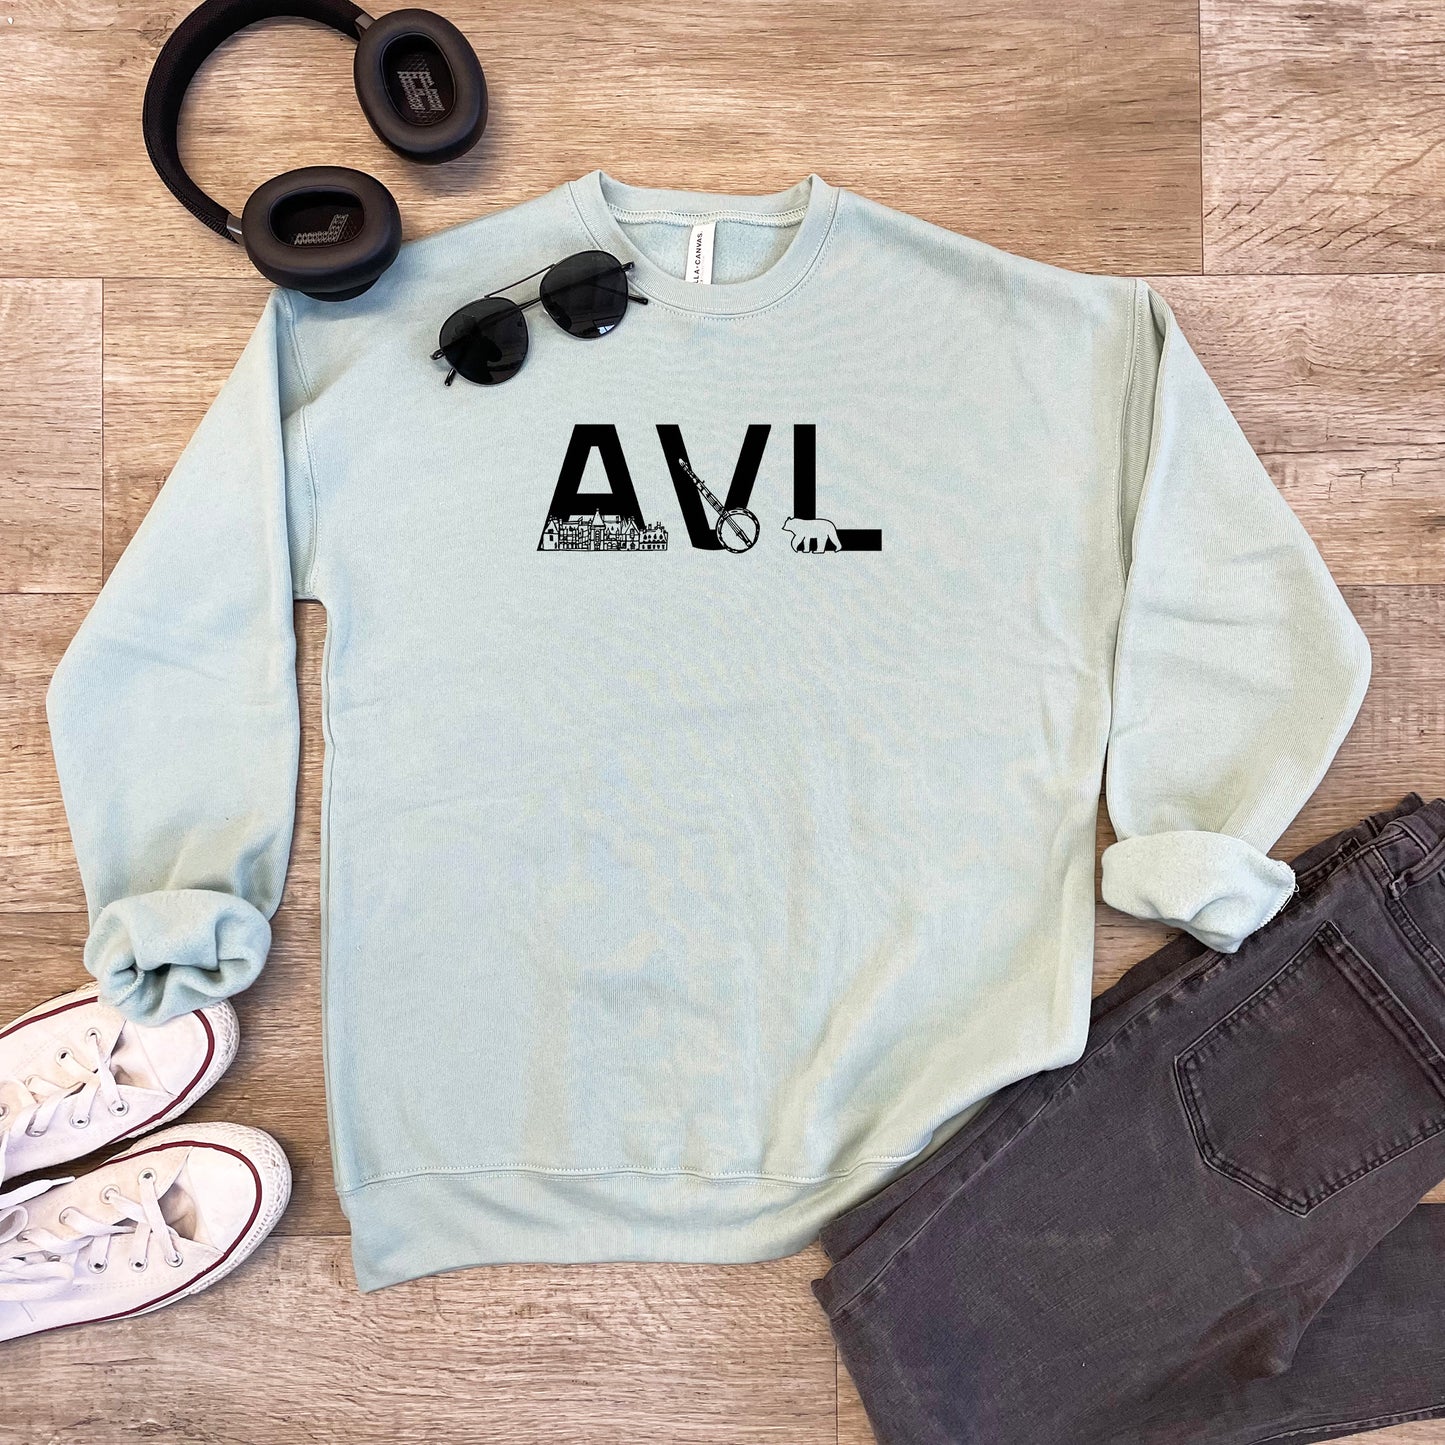 AVL (Asheville) - Unisex Sweatshirt - Heather Gray or Dusty Blue